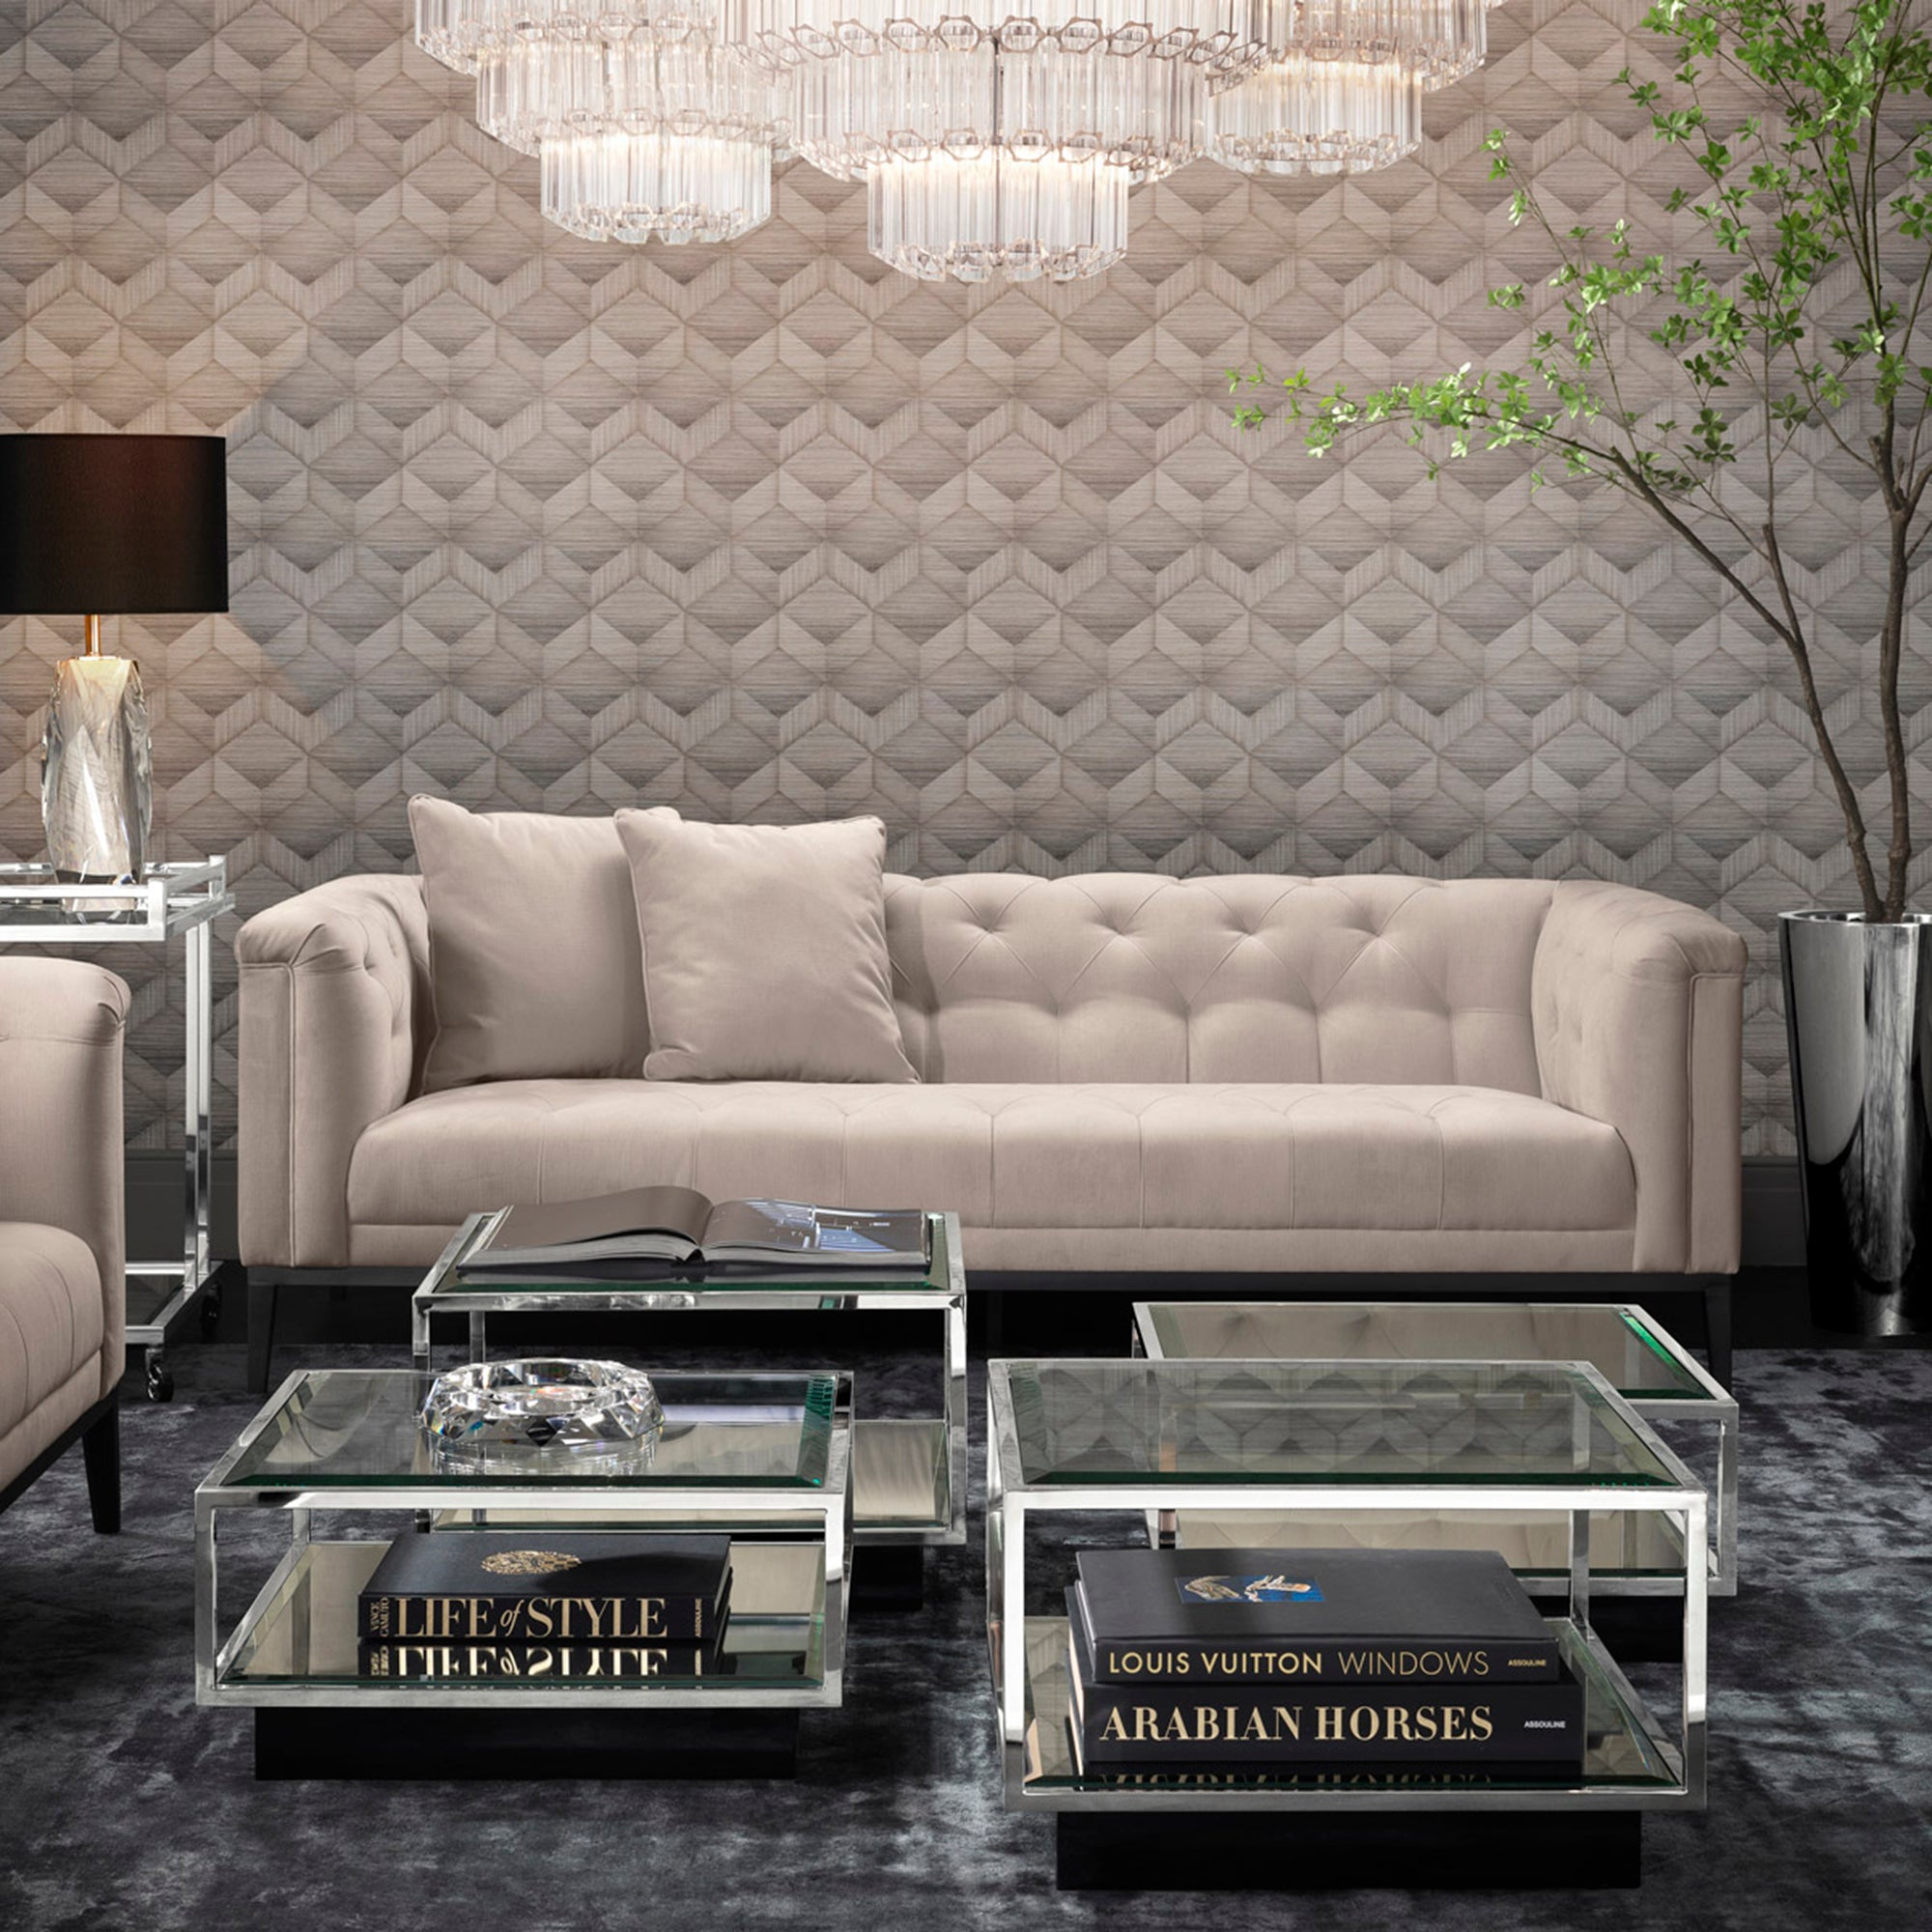 Eichholtz Cesare - Large Sofa In Fabric Lyssa Off-White